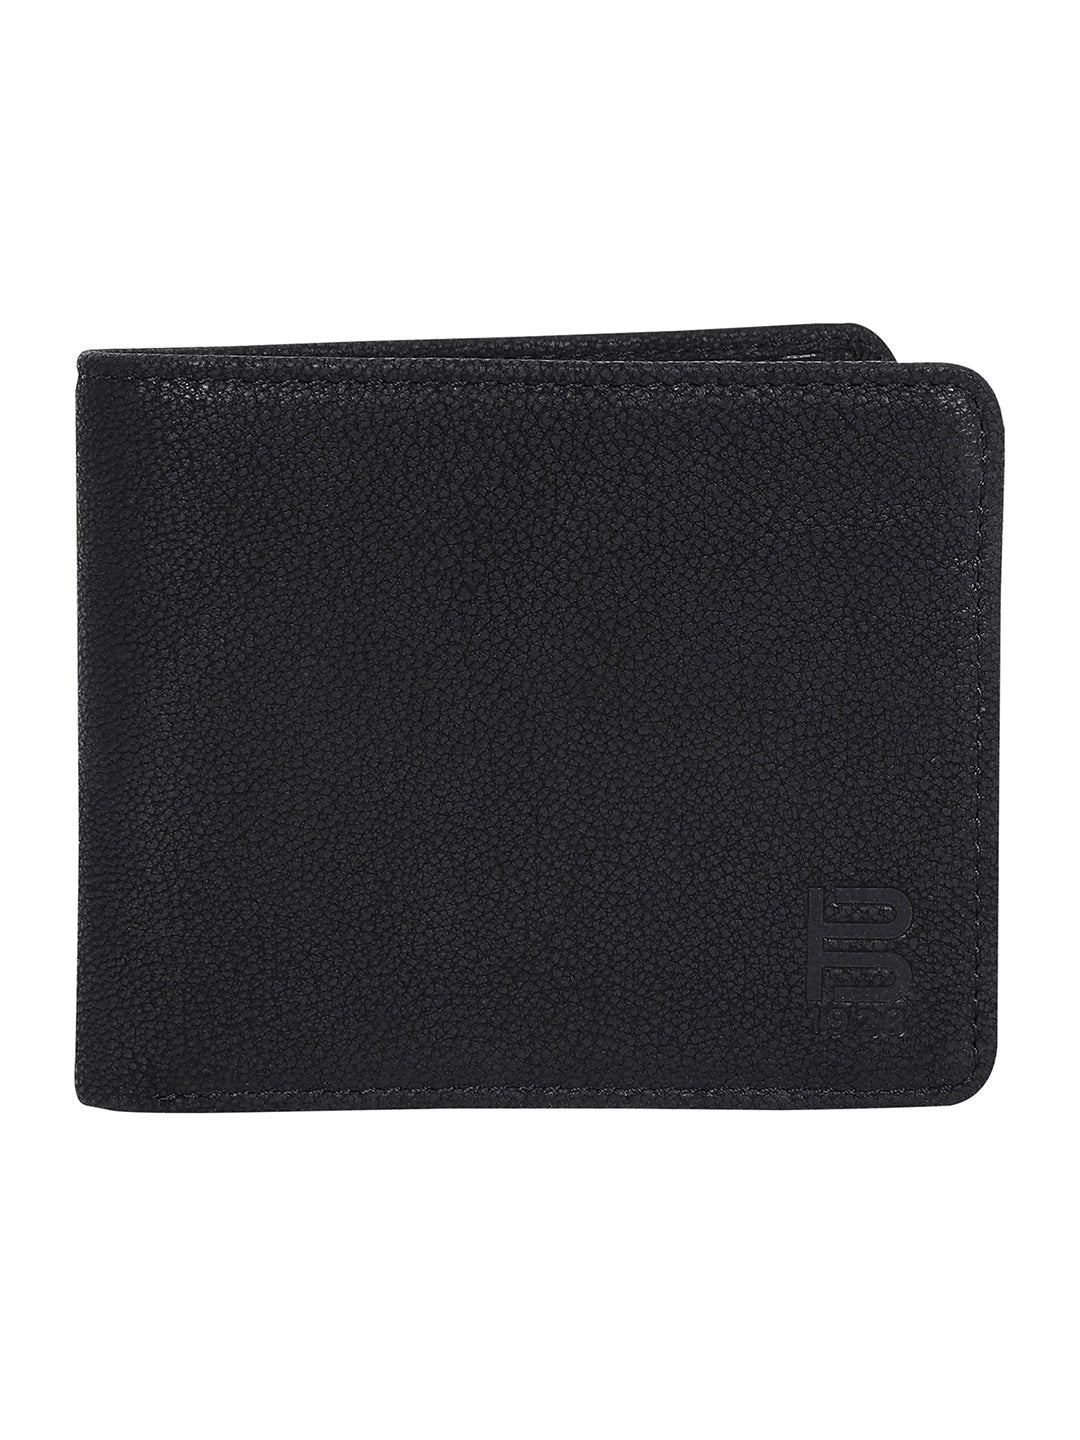 BAGATT Black Leather Men's Wallet